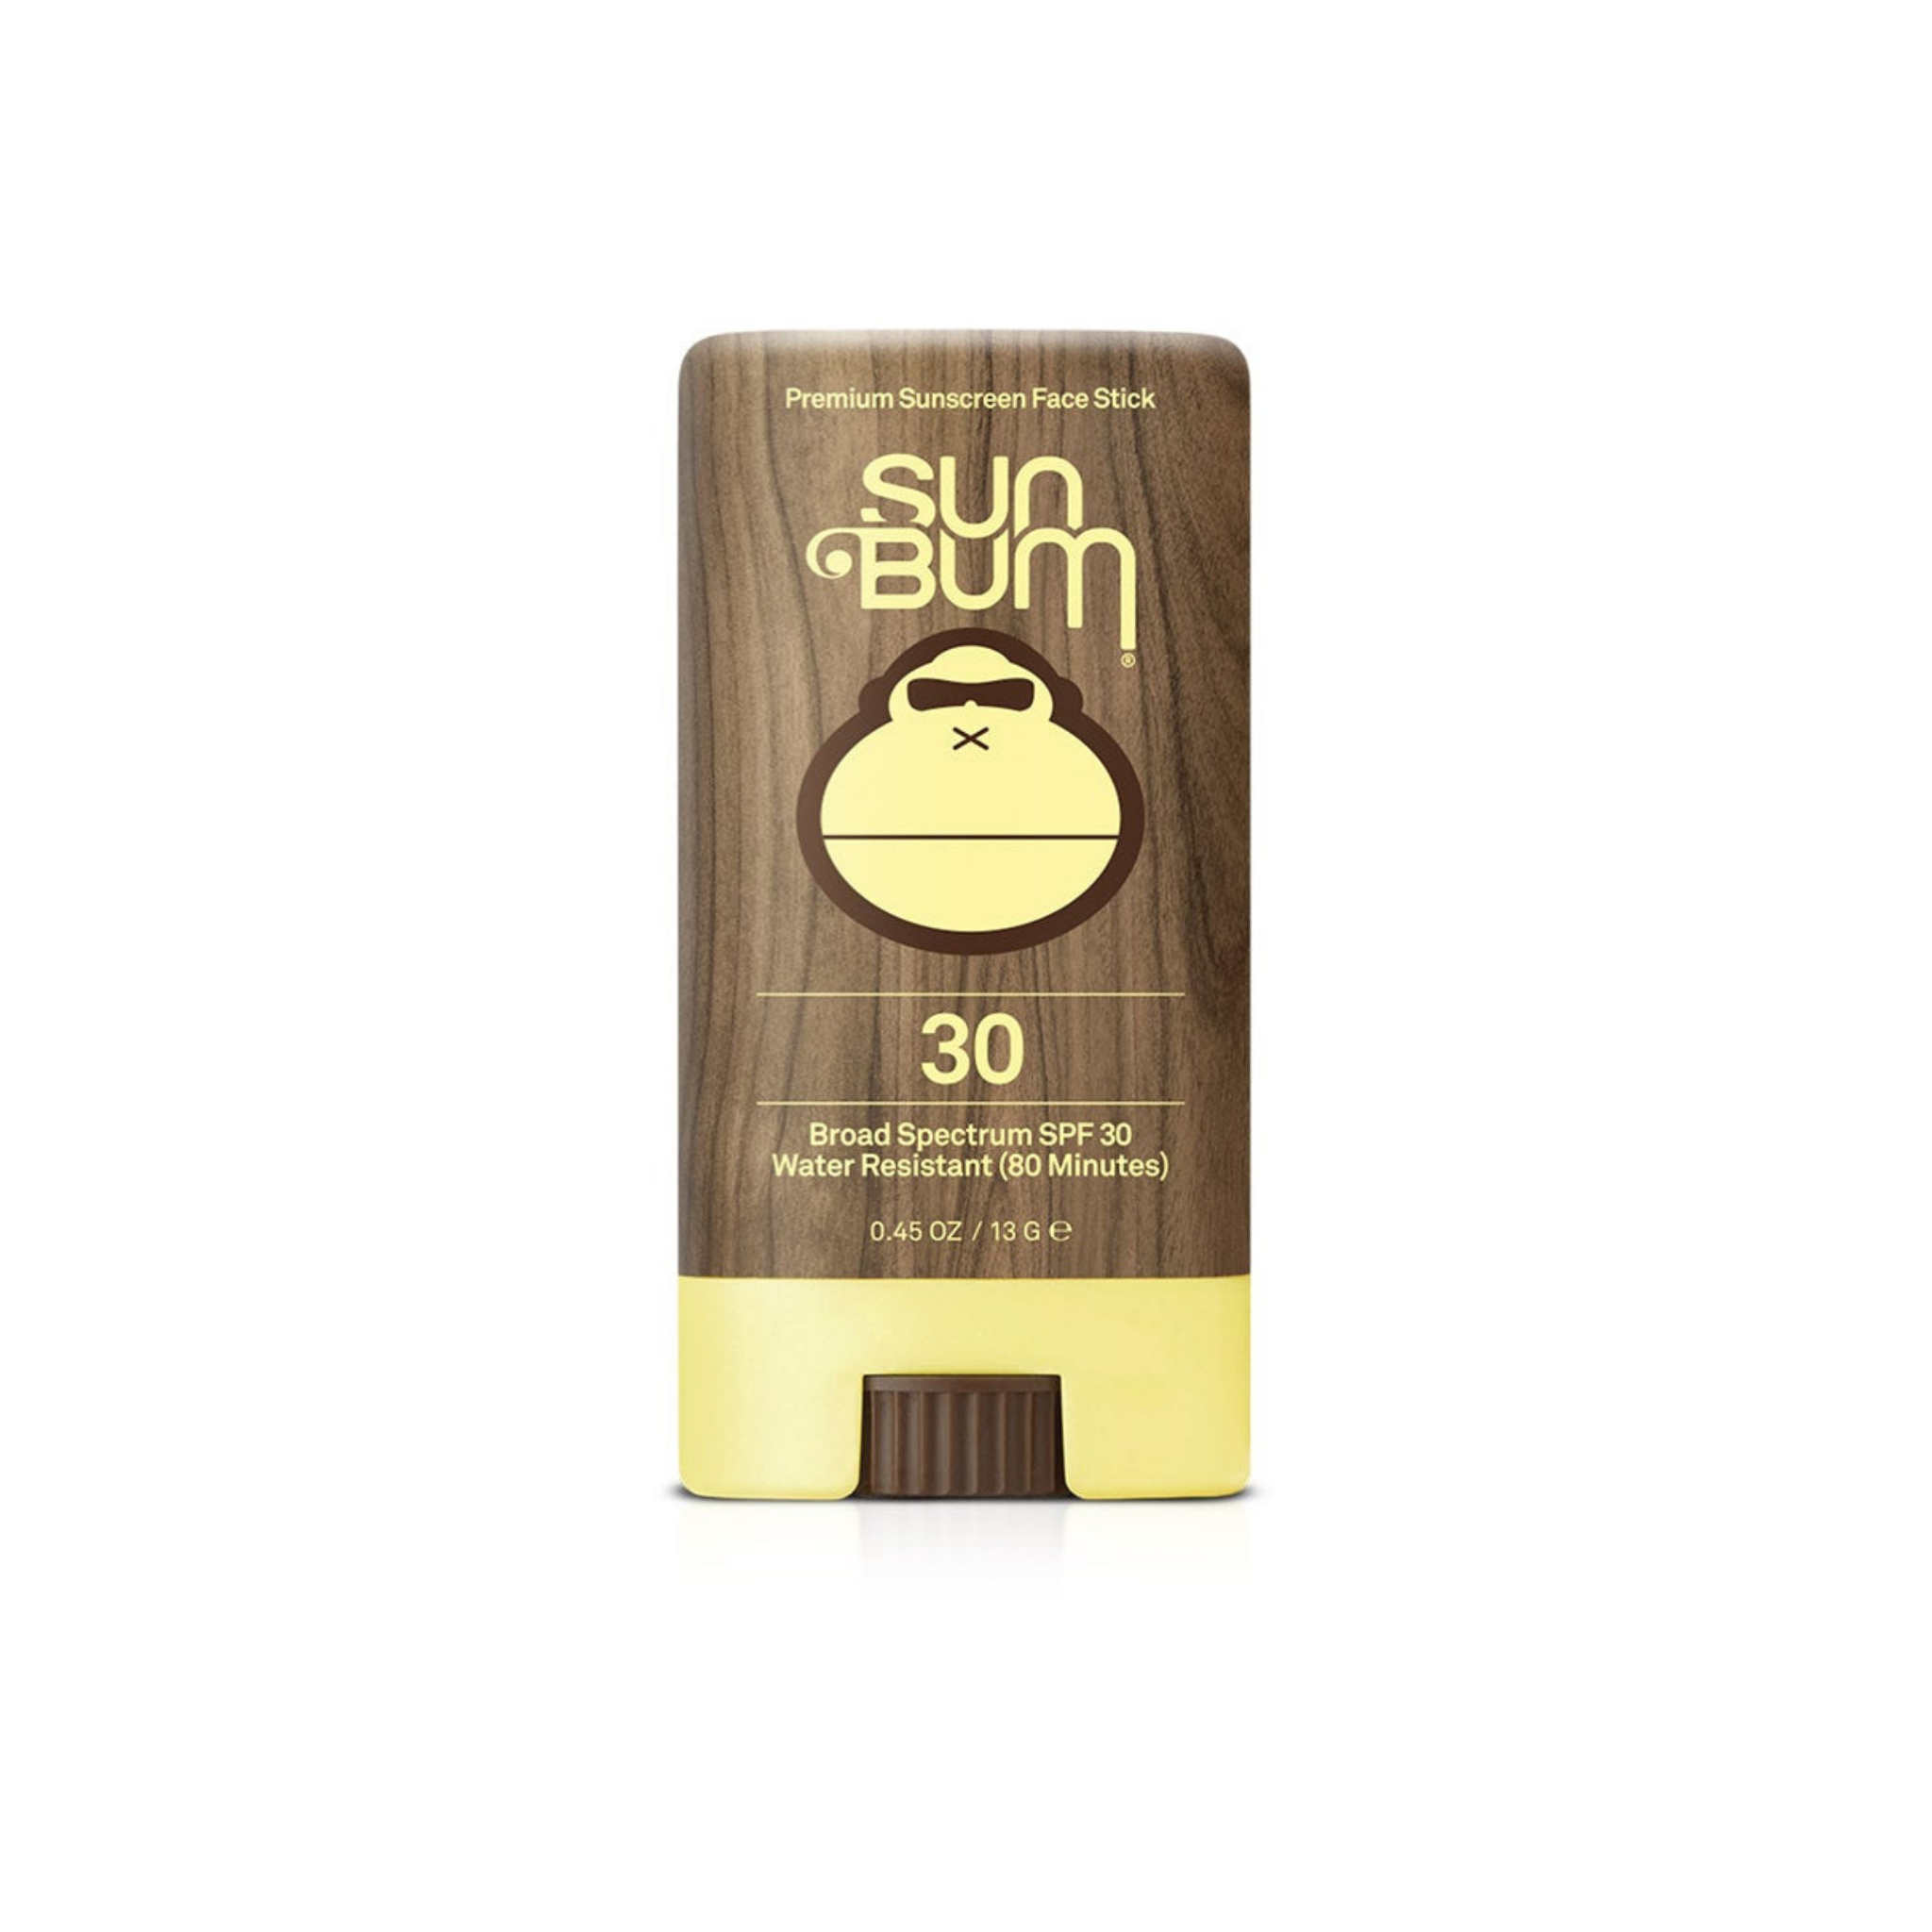 Original Sun Bum Face Stick Sunscreen